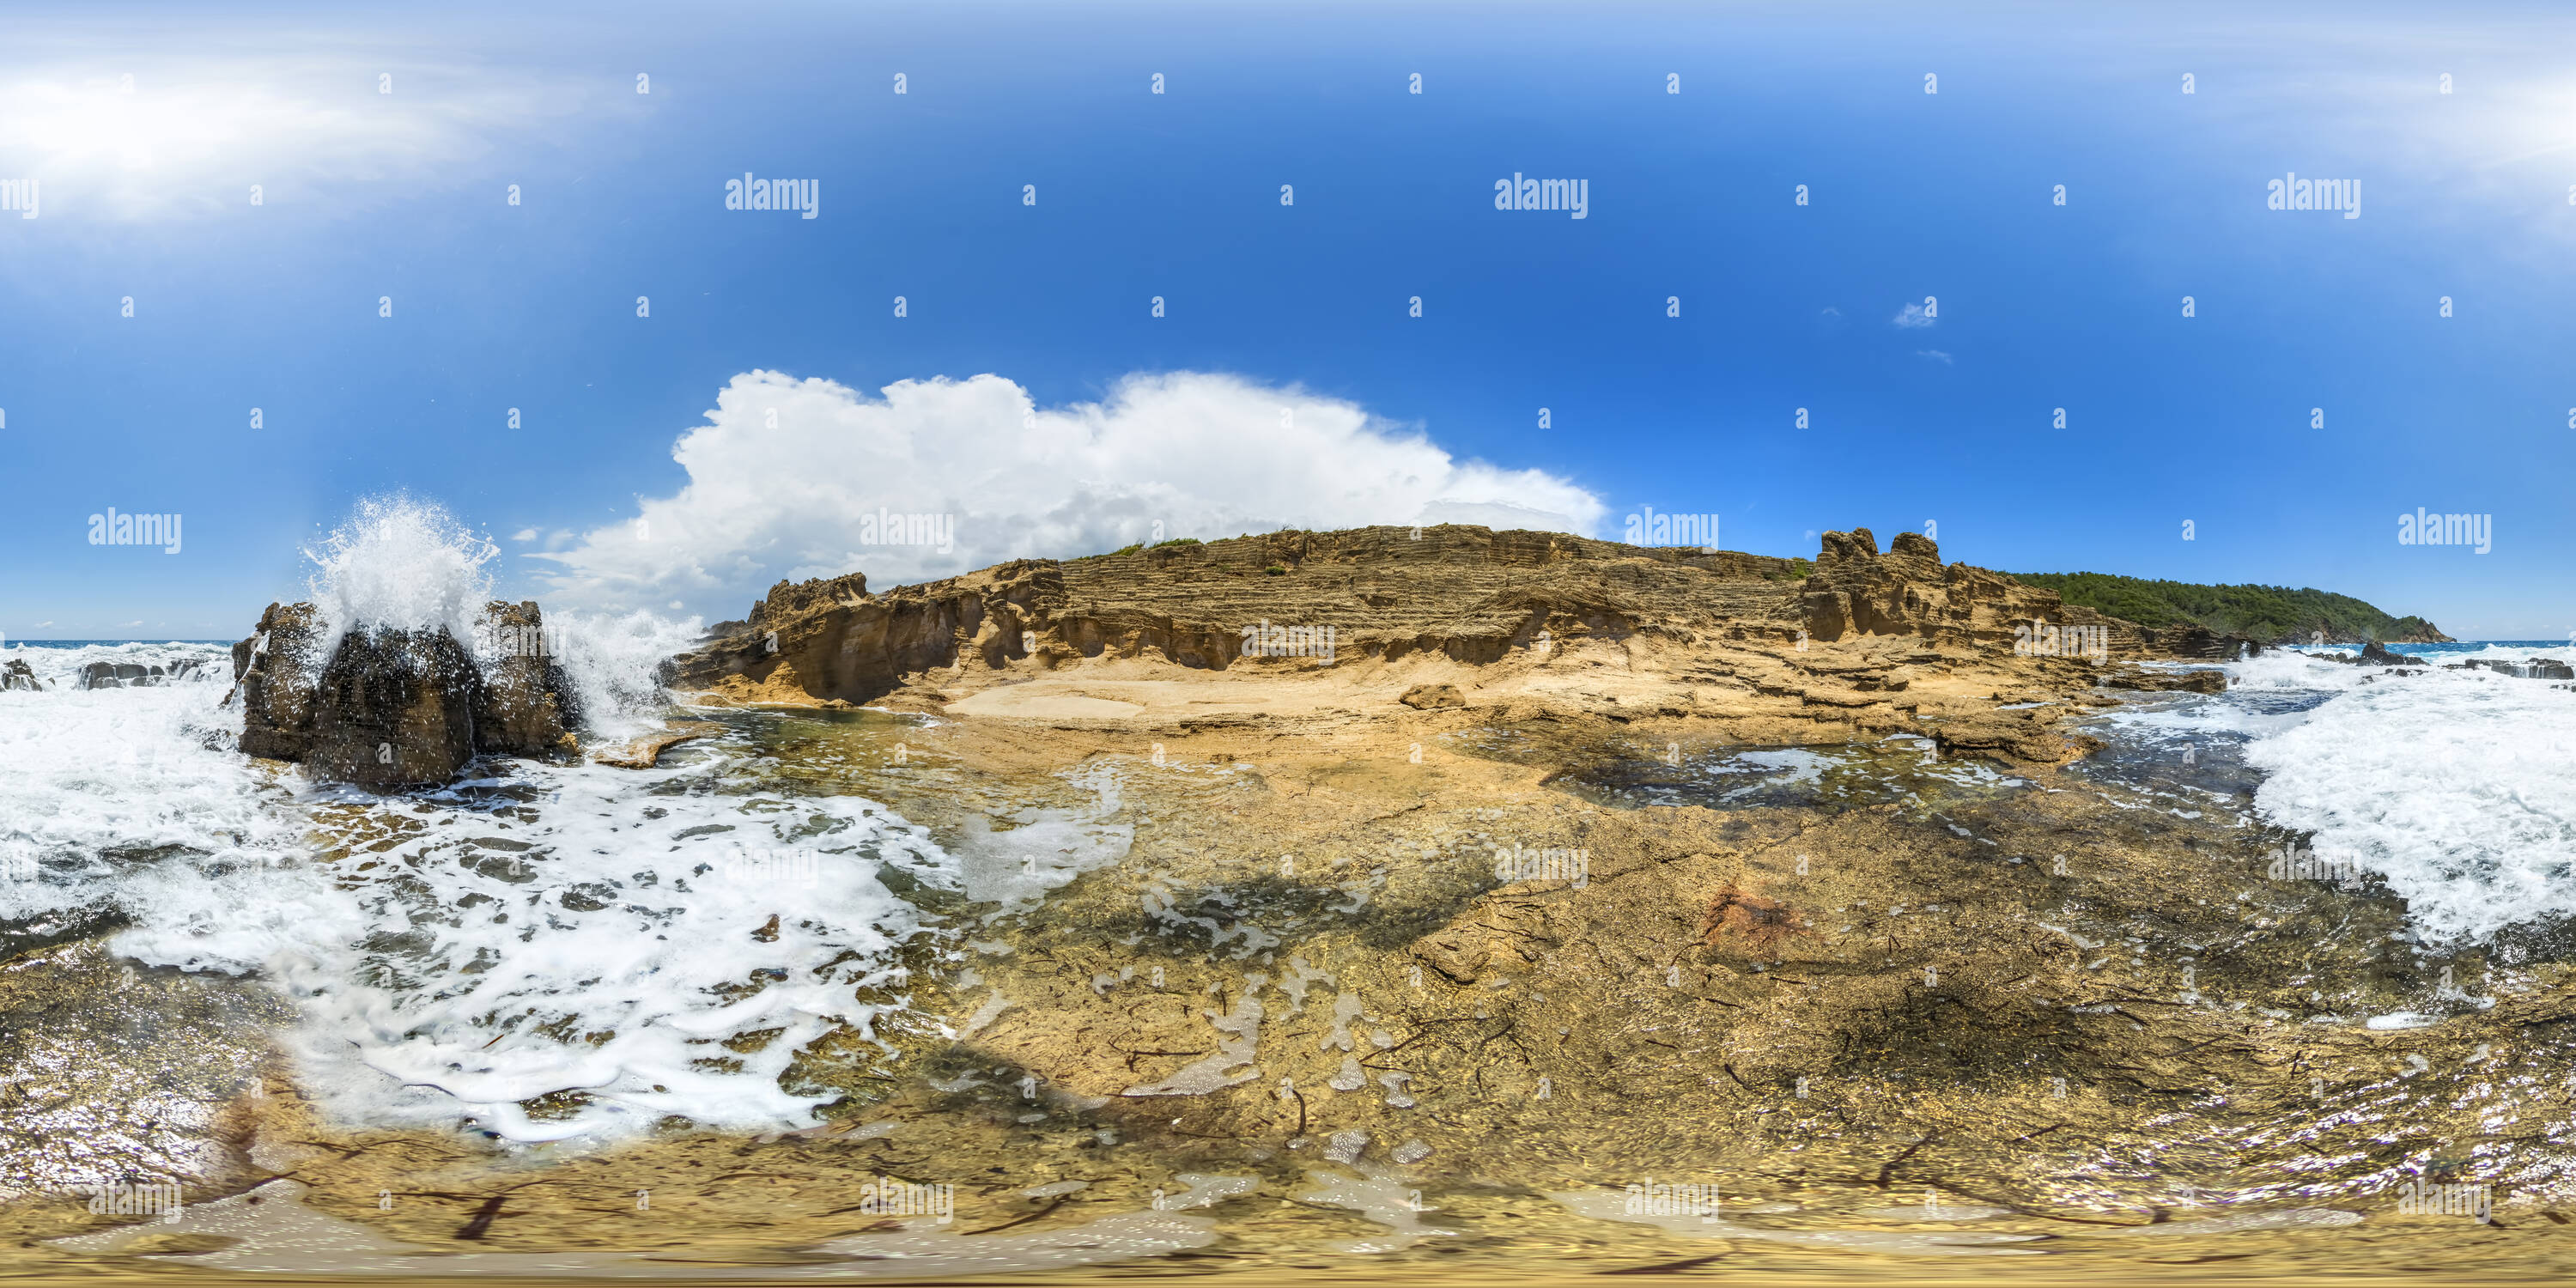 360 degree panoramic view of Melenia Bozyazi Vr Mersin 341